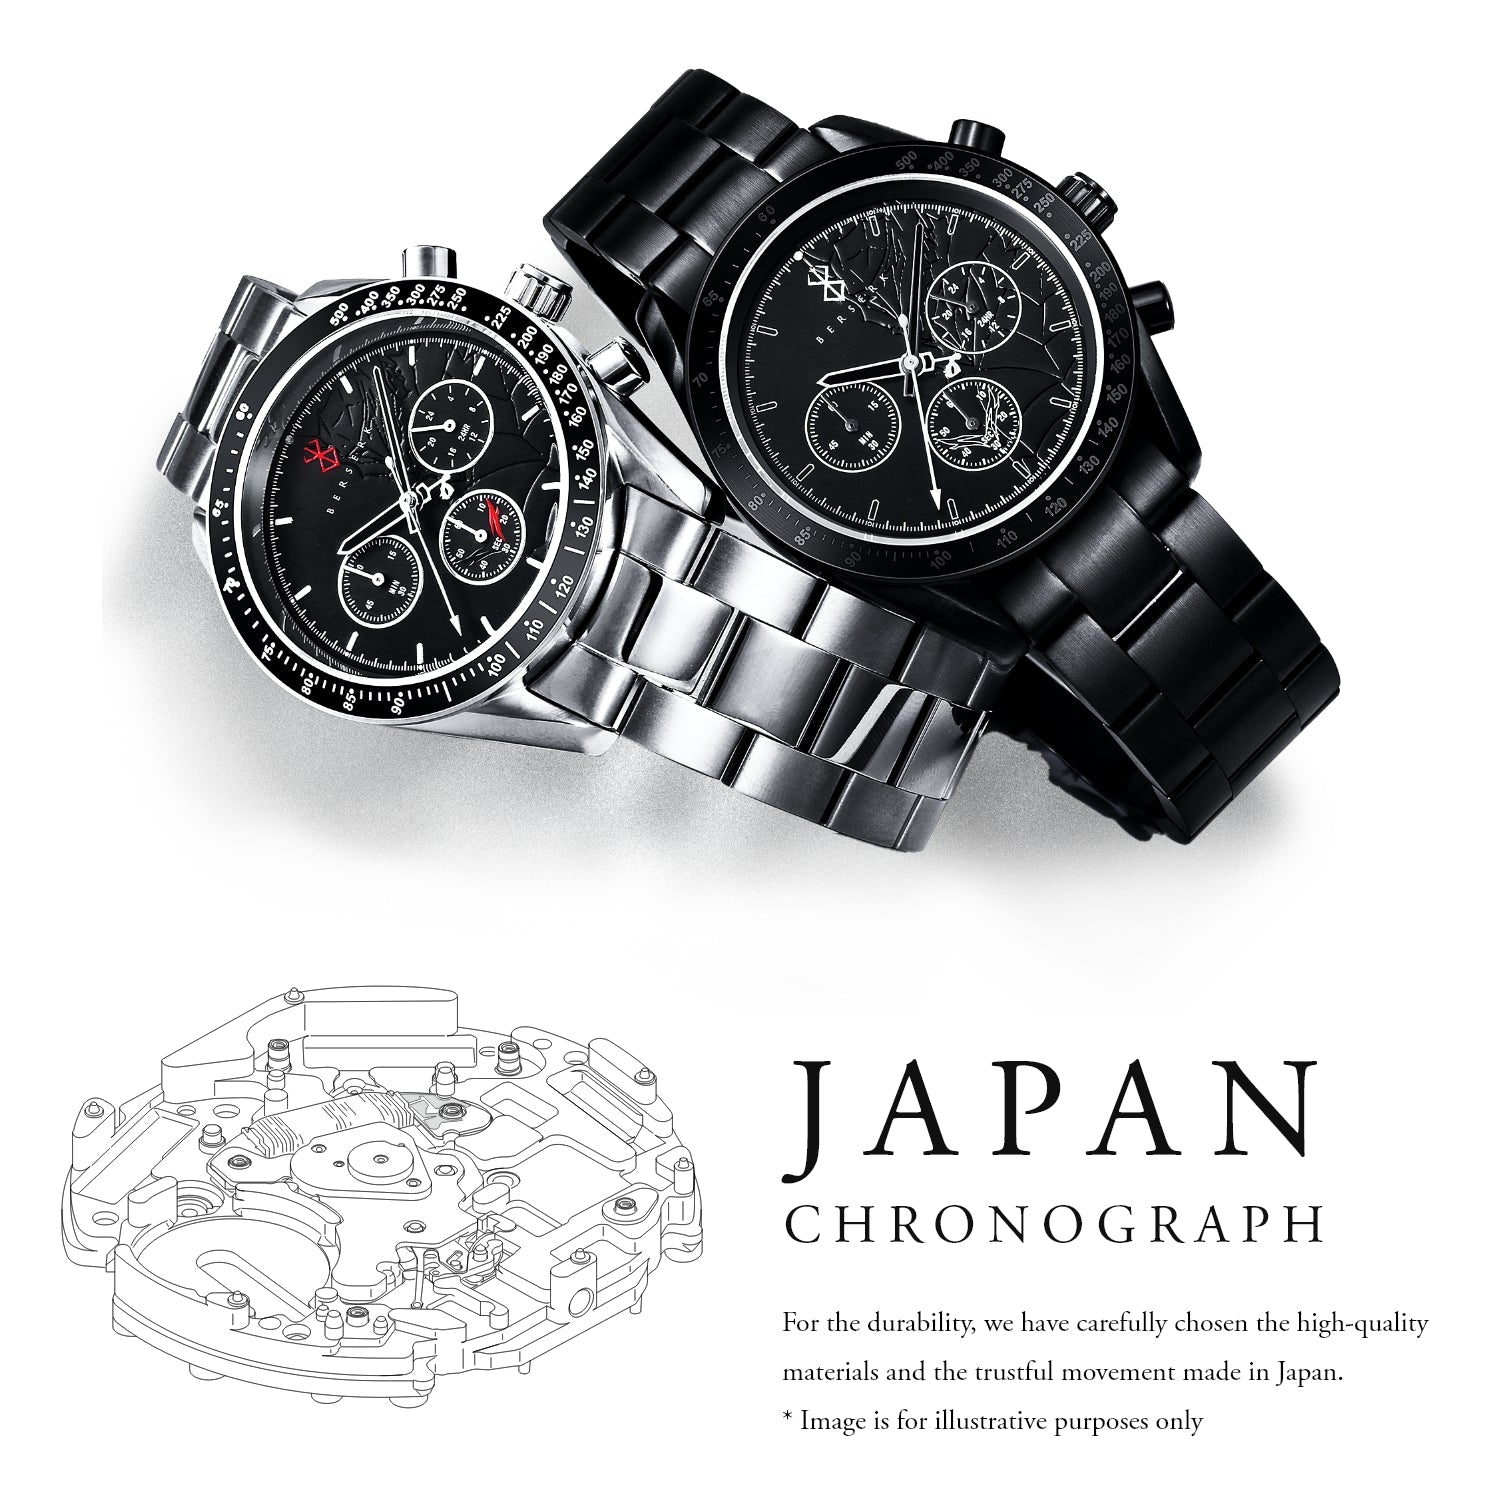 "Berserk" Natural Diamond Chronograph Wristwatch / All Black - 公式通販サイト「アニメコレクション/Anime Collection」